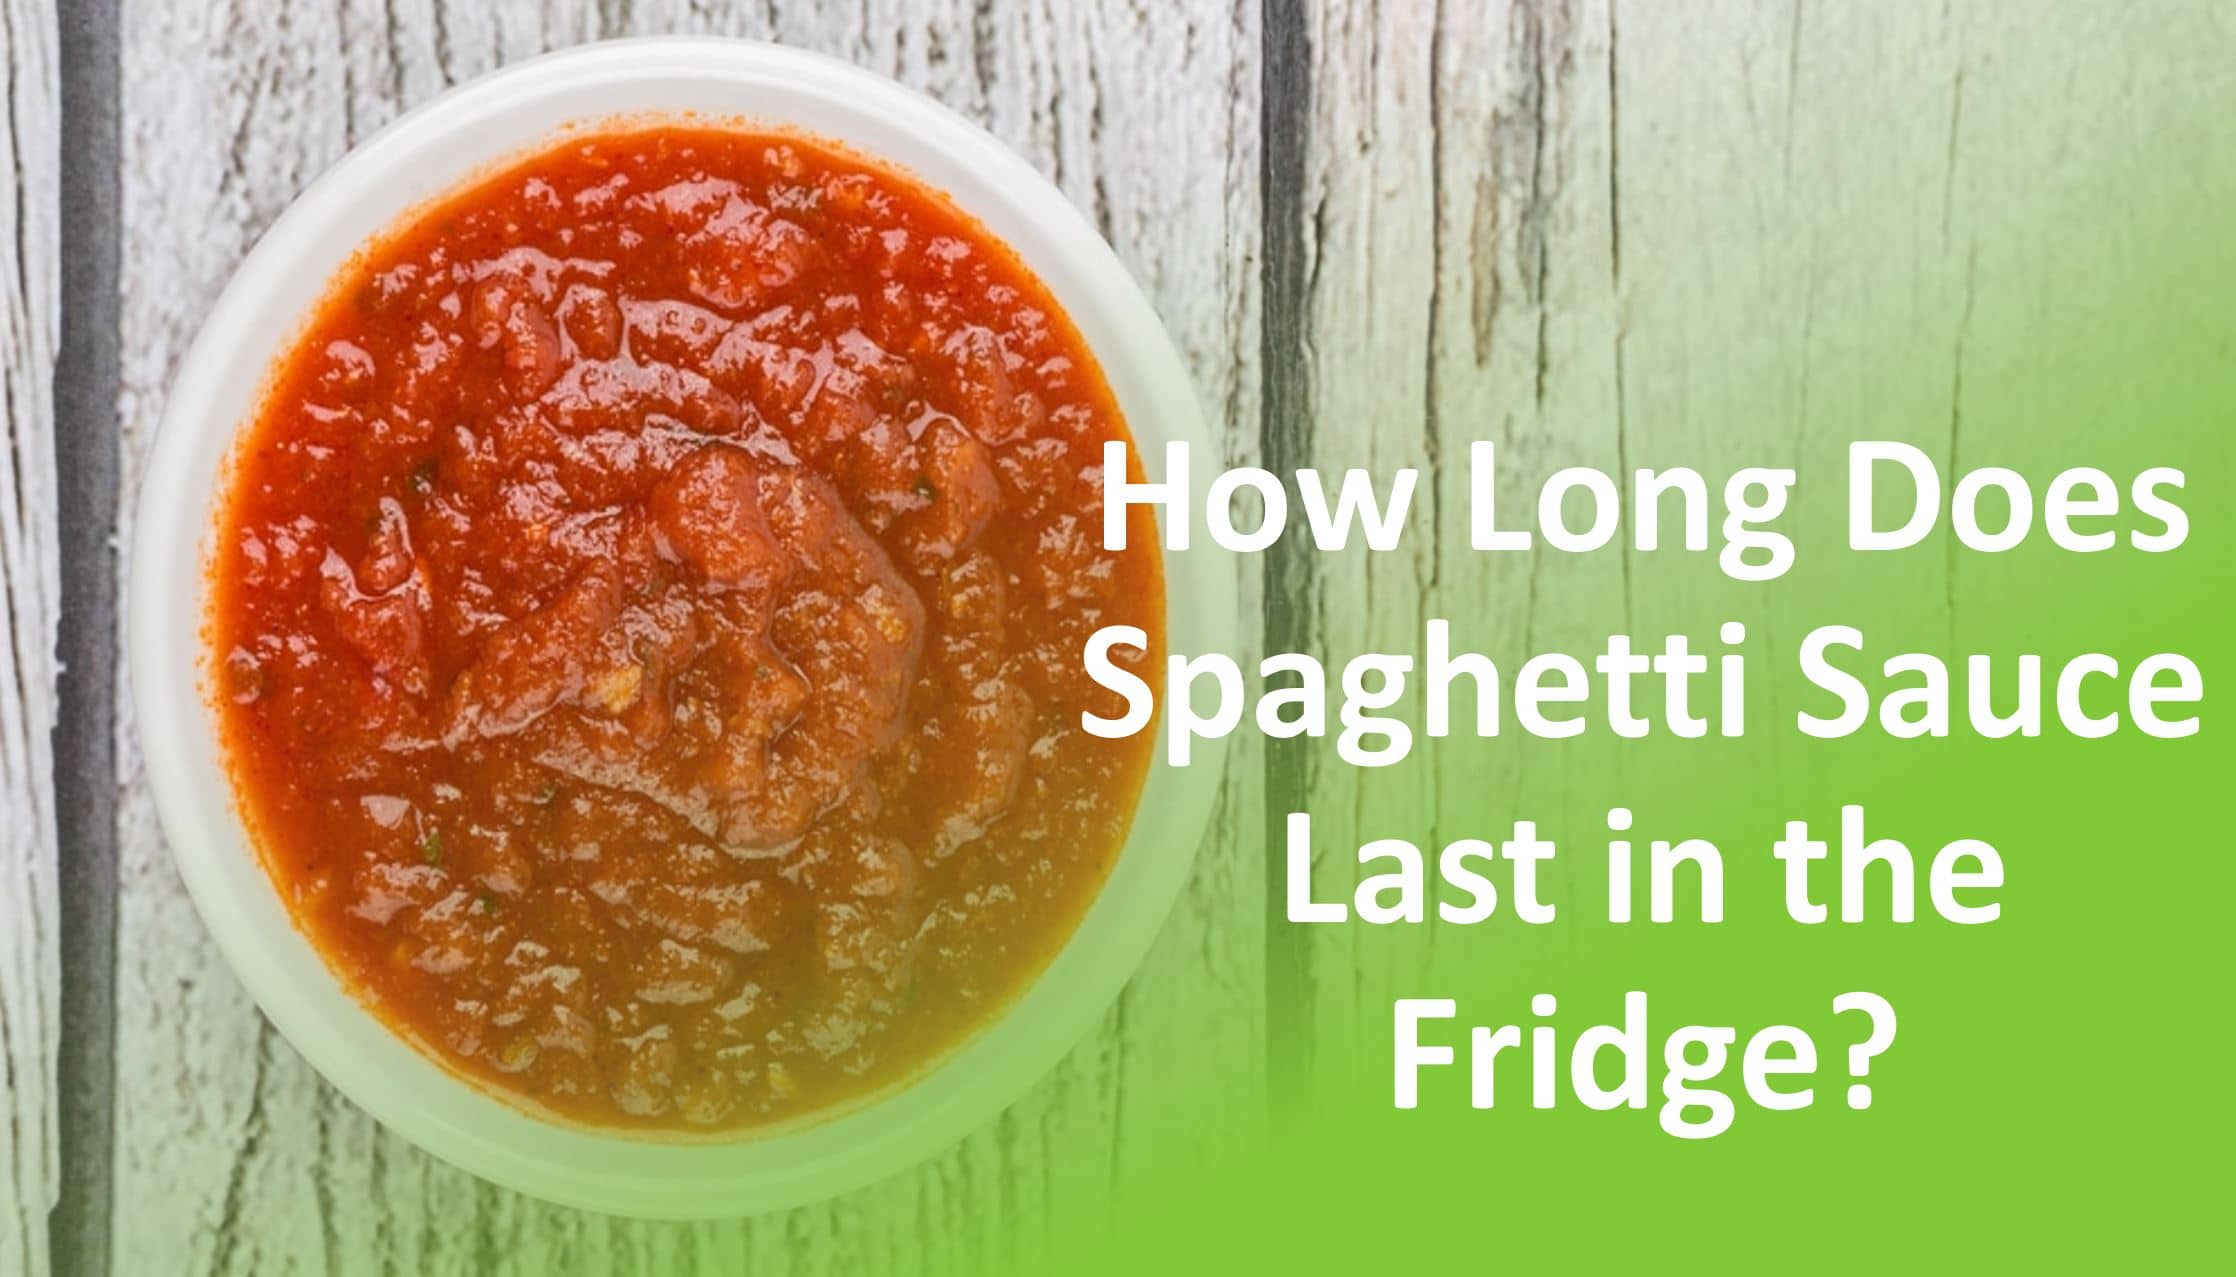 How Long is Spaghetti Sauce Good in the Fridge?